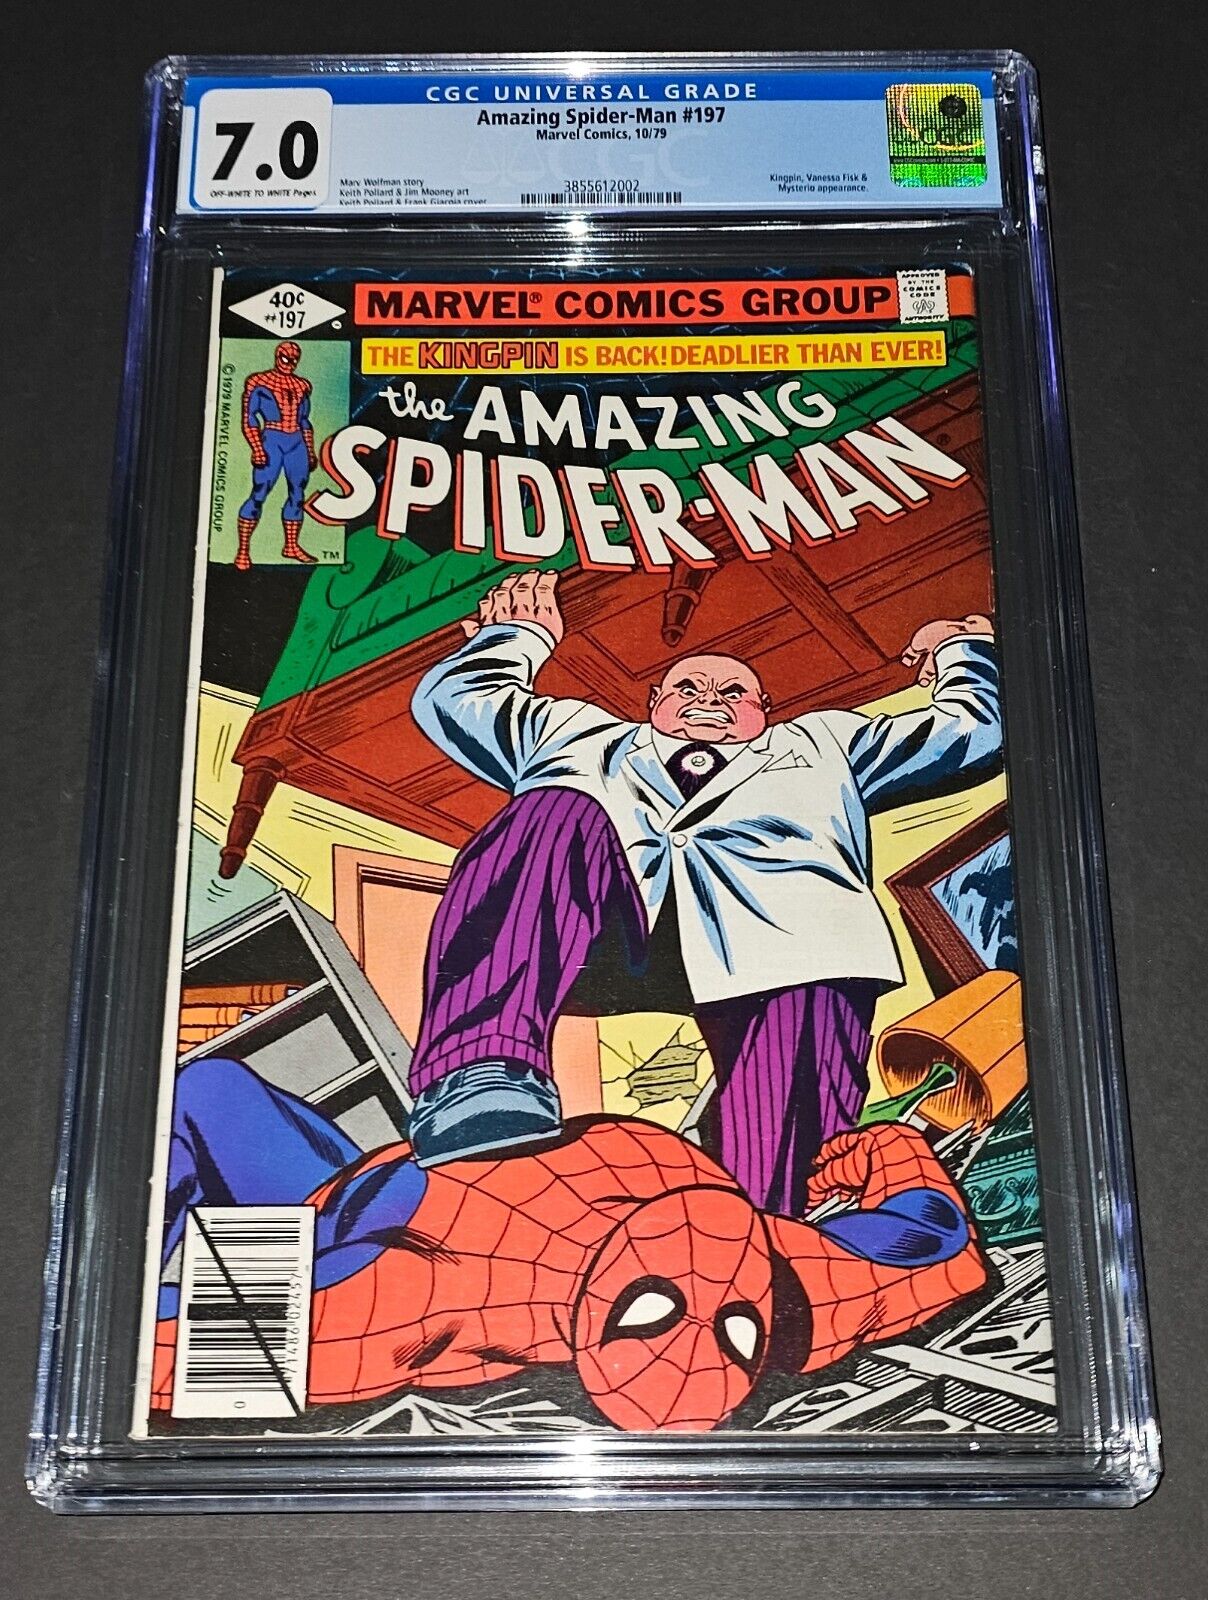 AMAZING SPIDER-MAN #197, CGC 7.0  1979 MARVEL COMICS